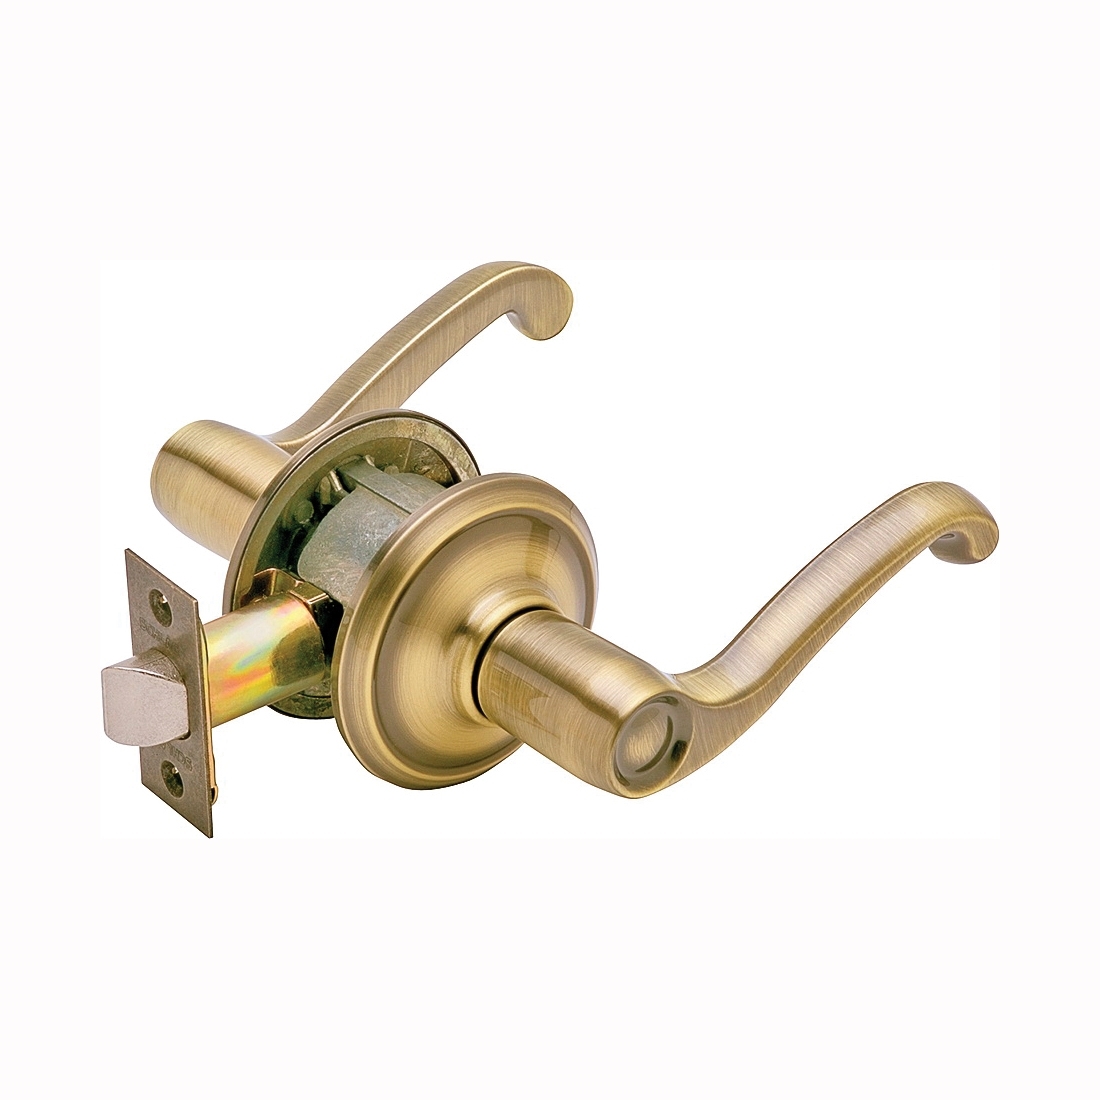 F Series F10 FLA 609 Passage Lever, Mechanical Lock, Antique Brass, Metal, Residential, 2 Grade